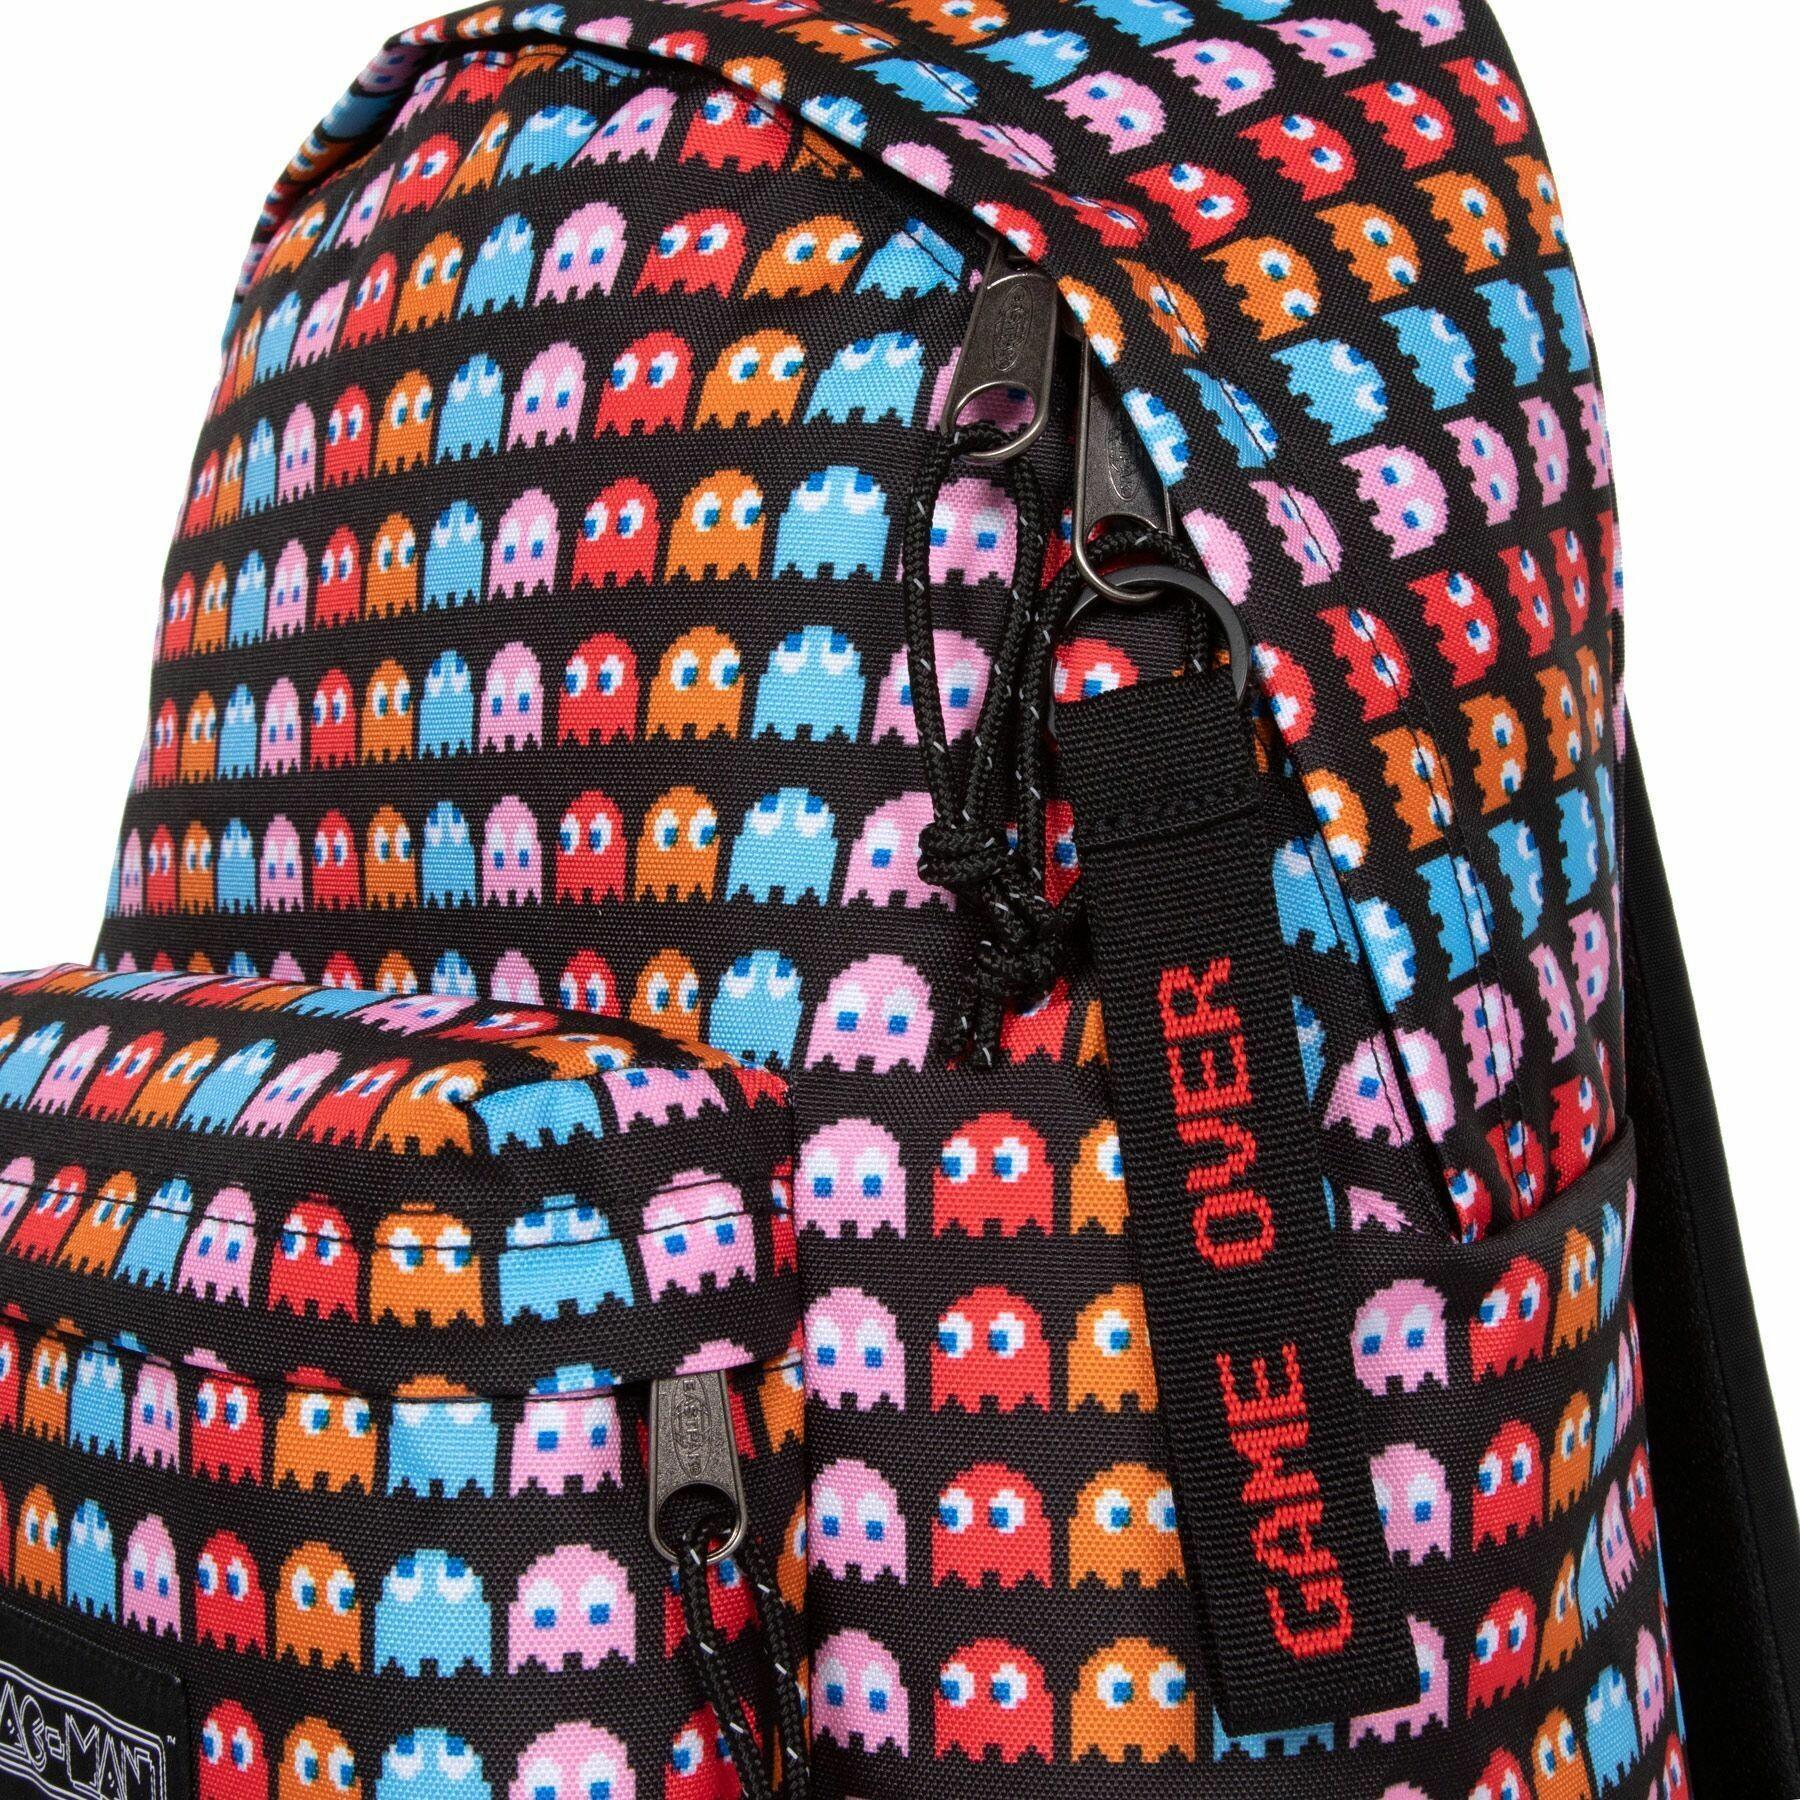 Backpack Eastpak Padded Pak'R X14 Pac-Man